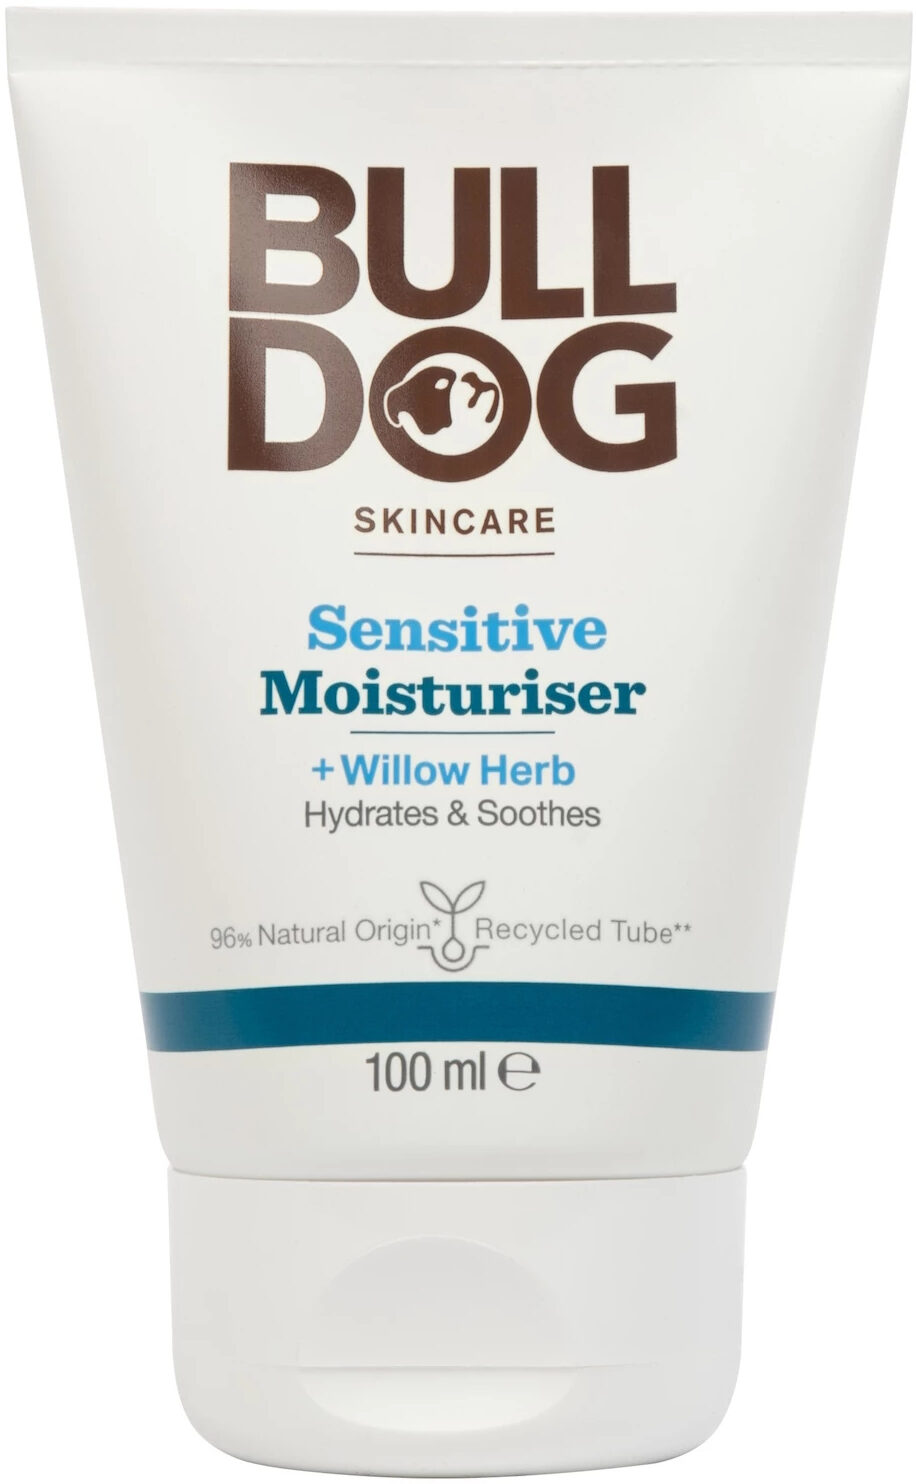 Sensitive moisturiser - Product - en